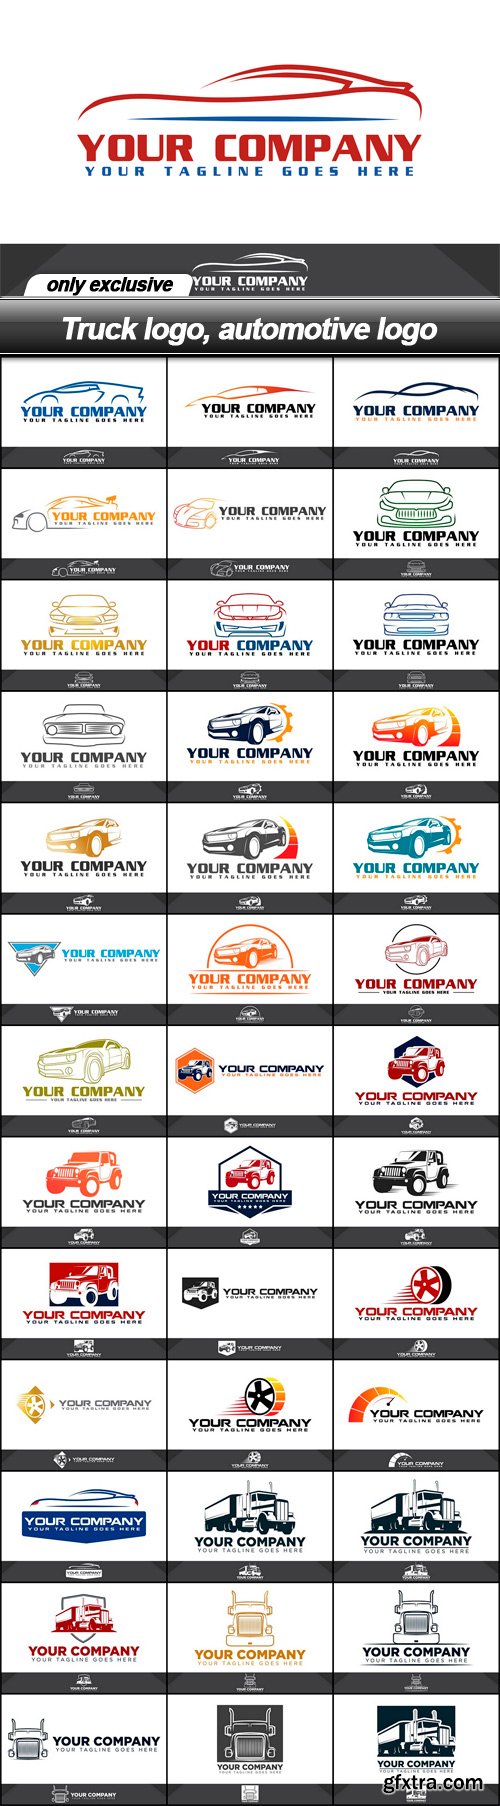 Truck logo, automotive logo - 40 EPS